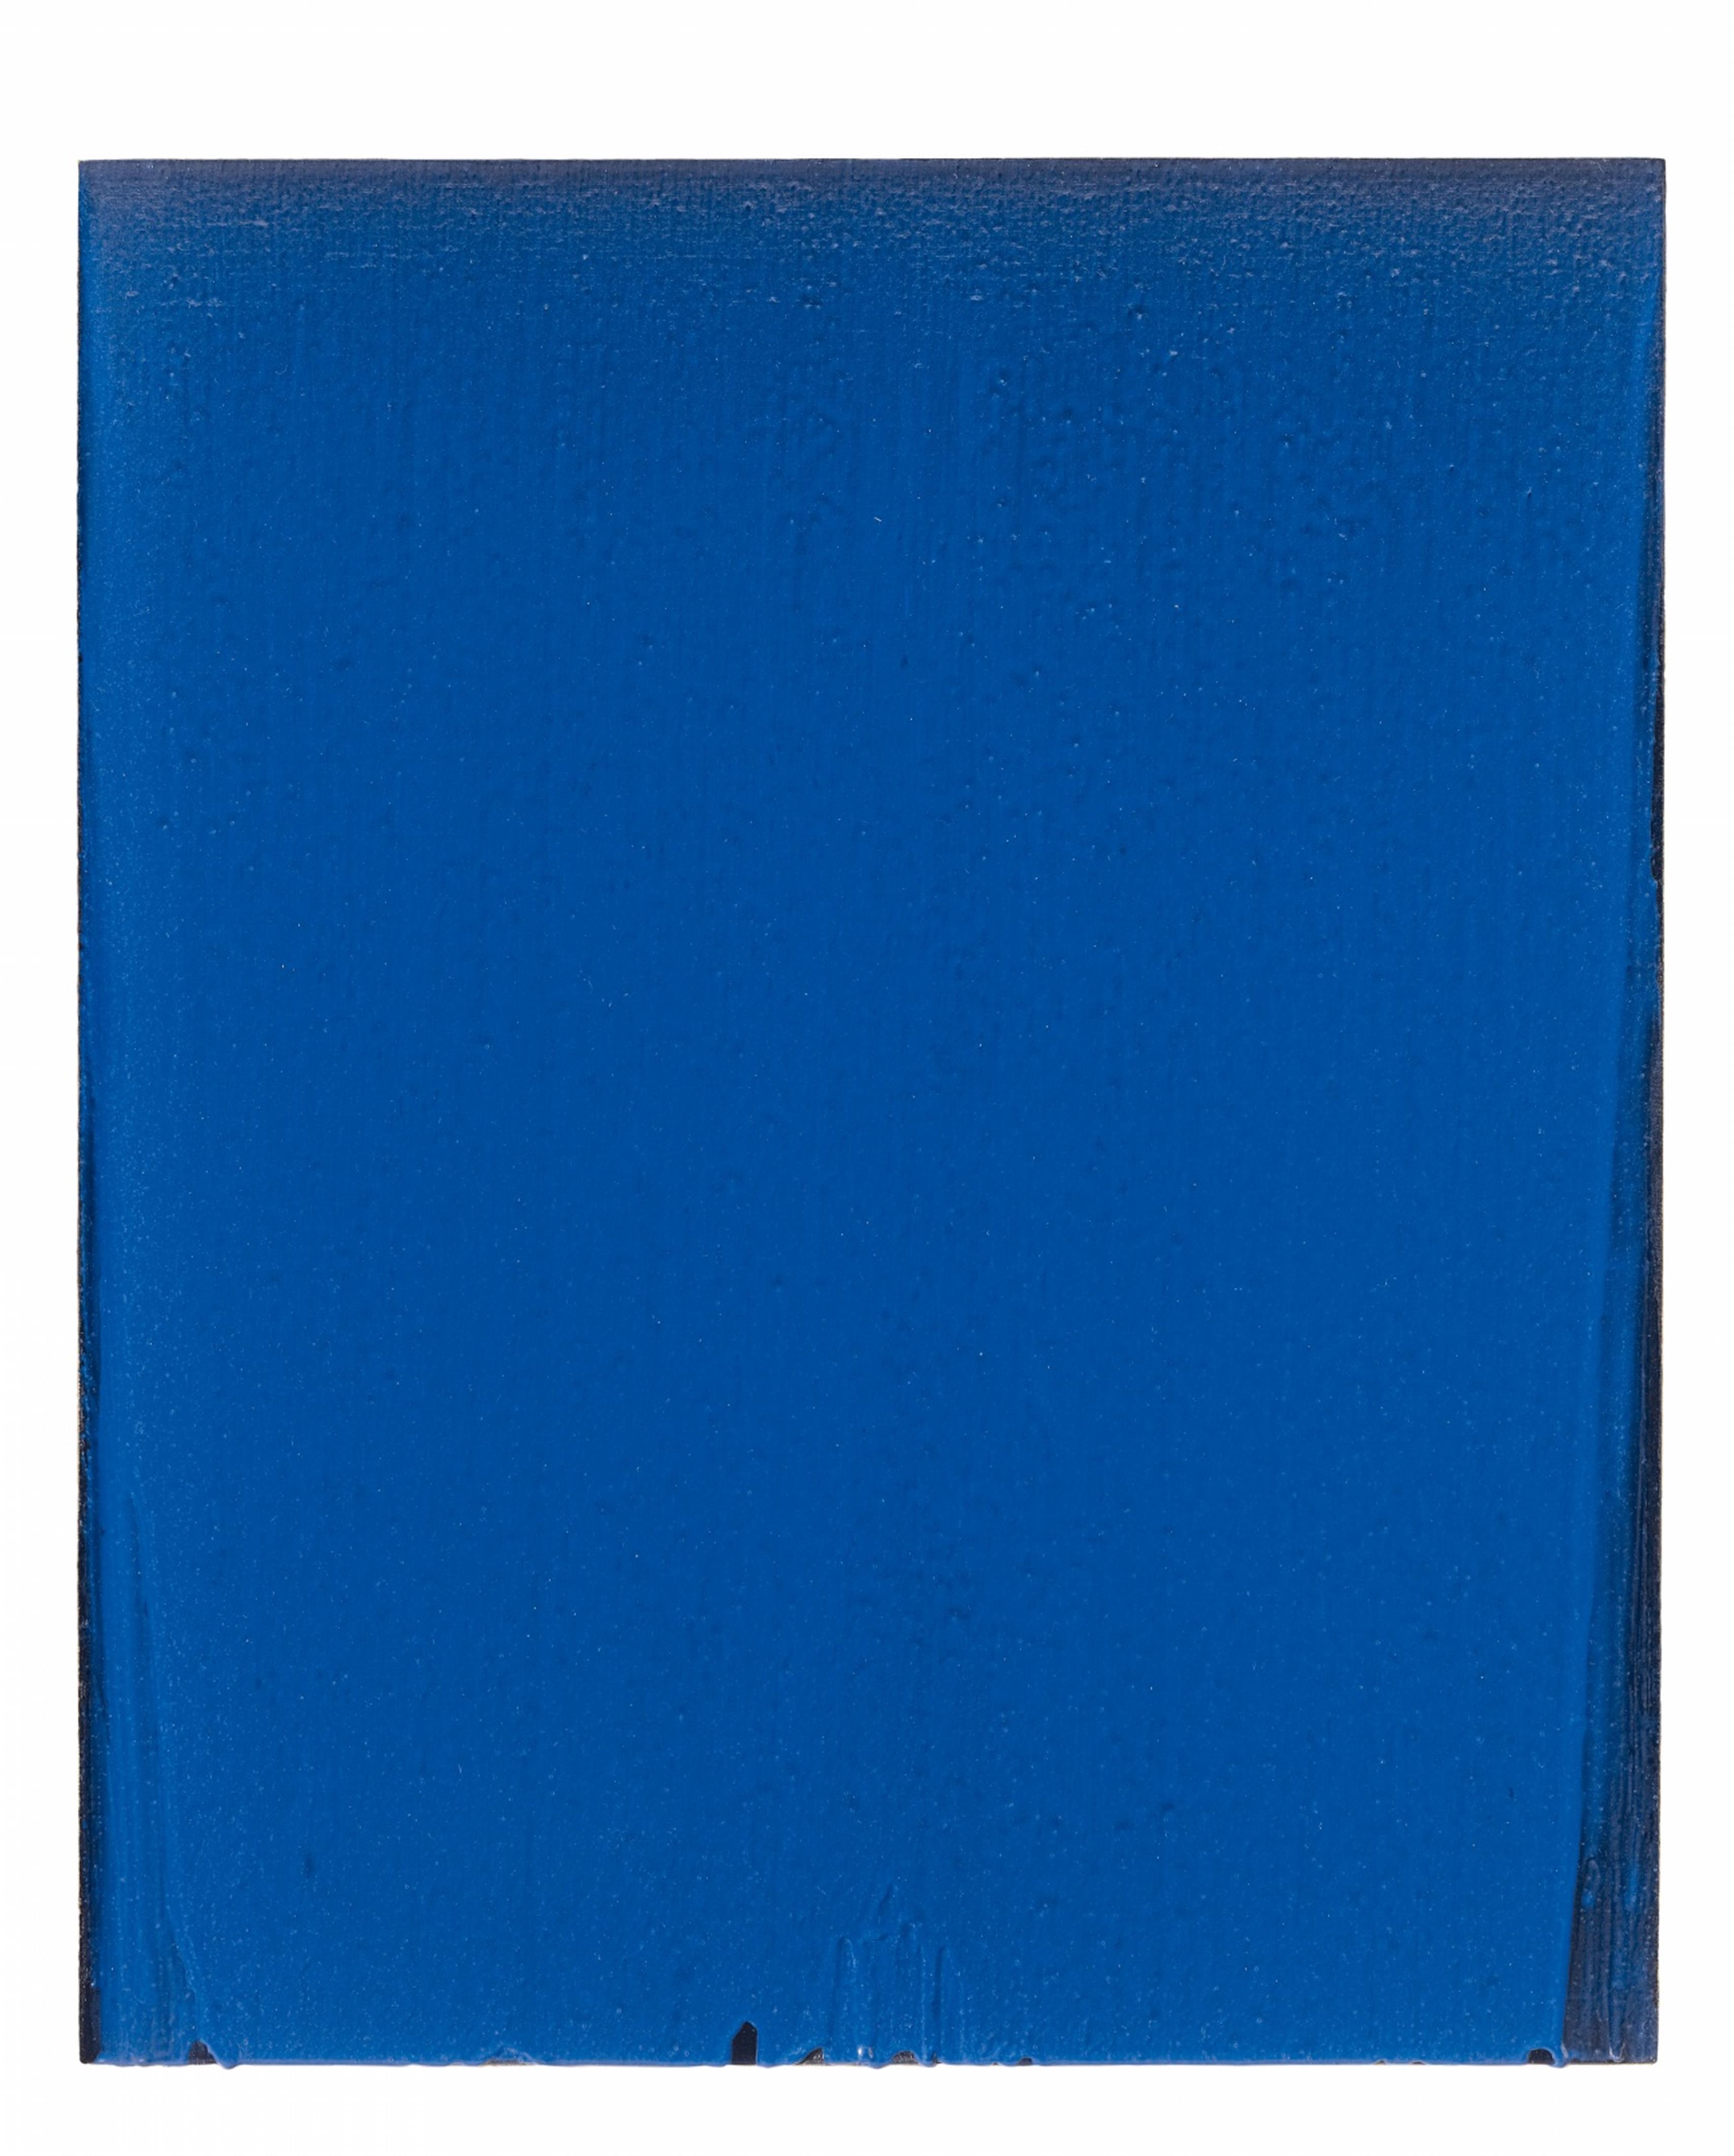 Joseph Marioni - Blue Painting - image-1